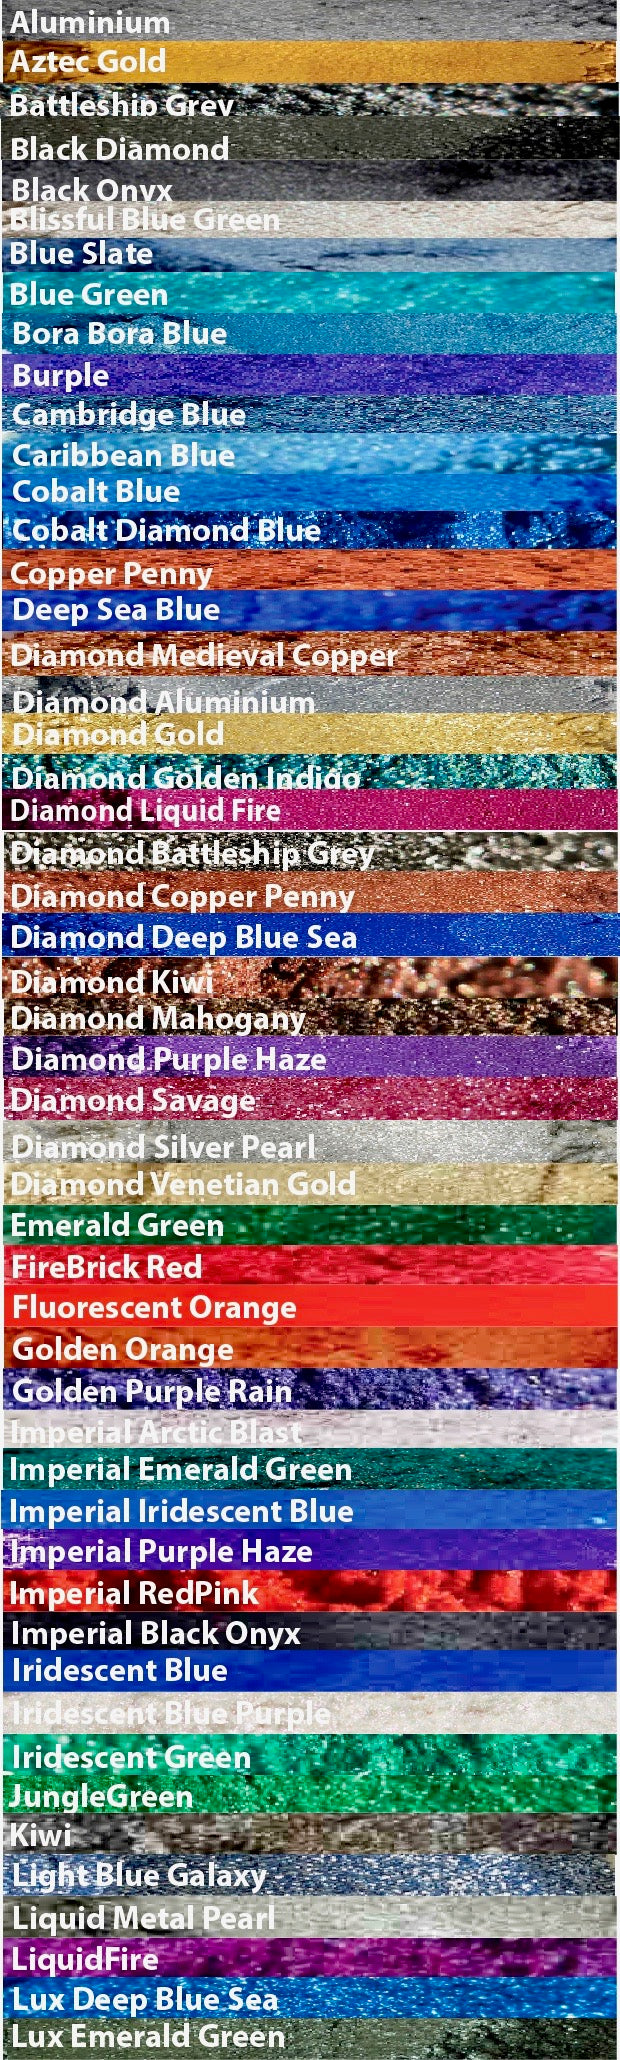 "BLUE/GREEN" Black Diamond Pigments